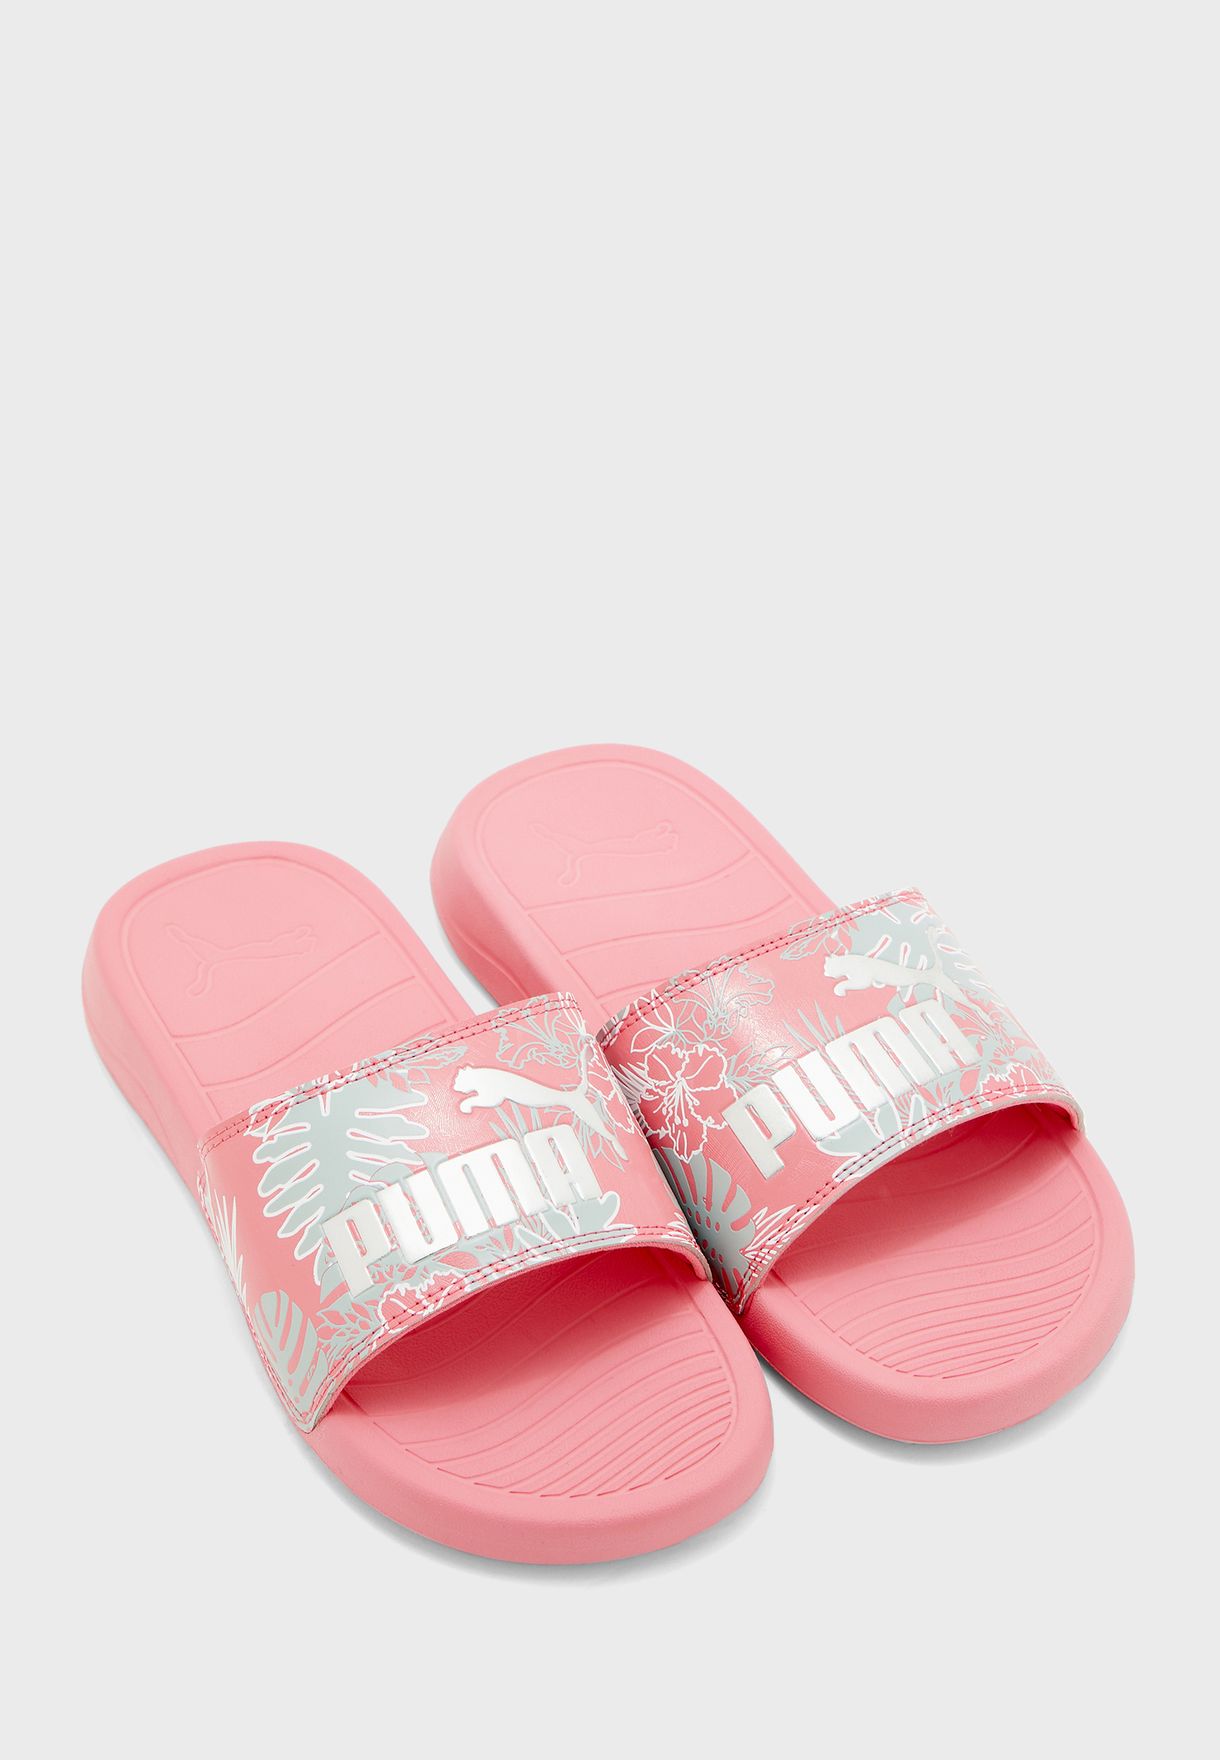 pink and white puma slides